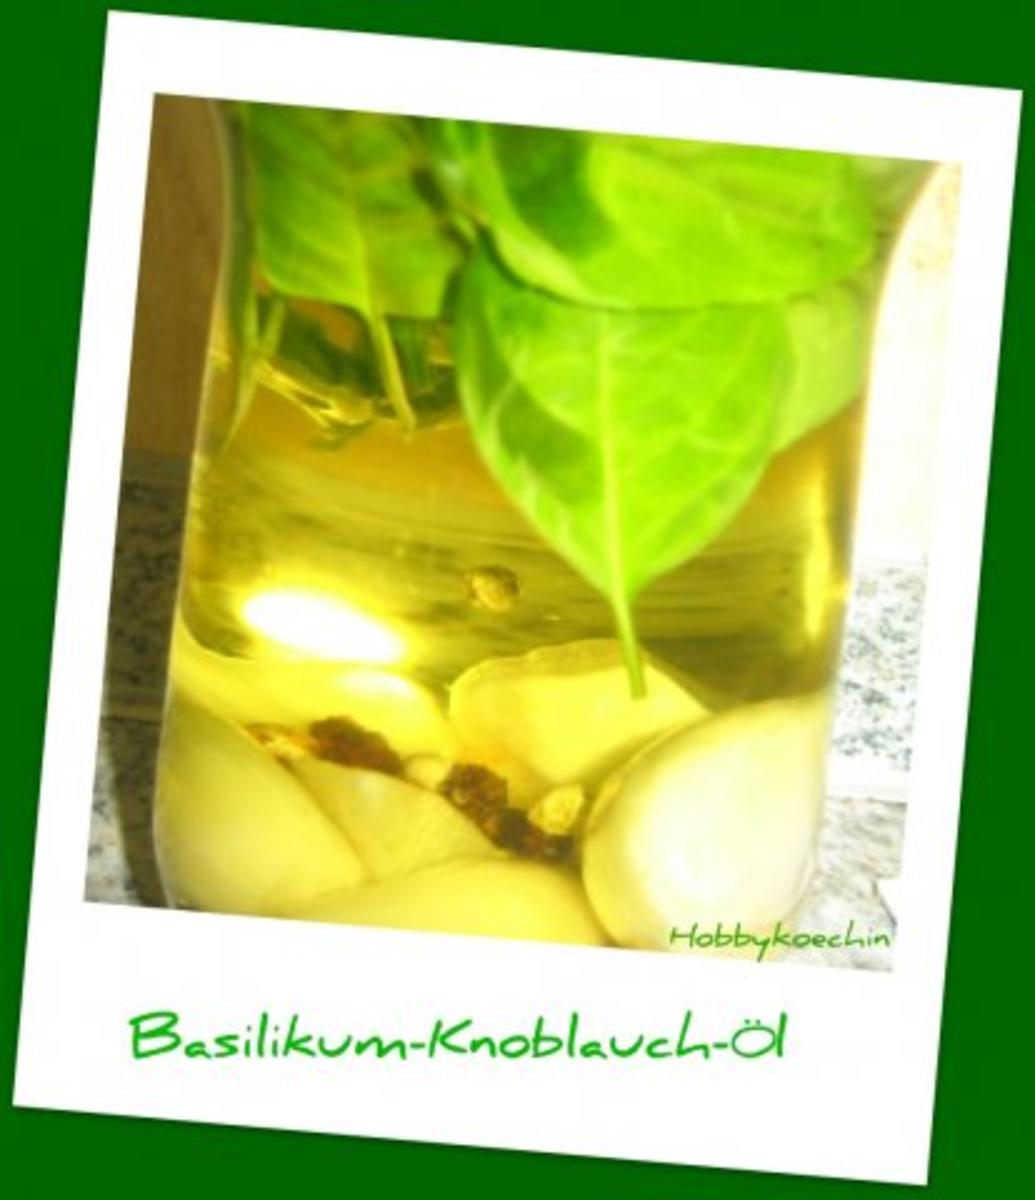 Vorratshaltung - Basilikum-Knoblauch-Öl - Rezept